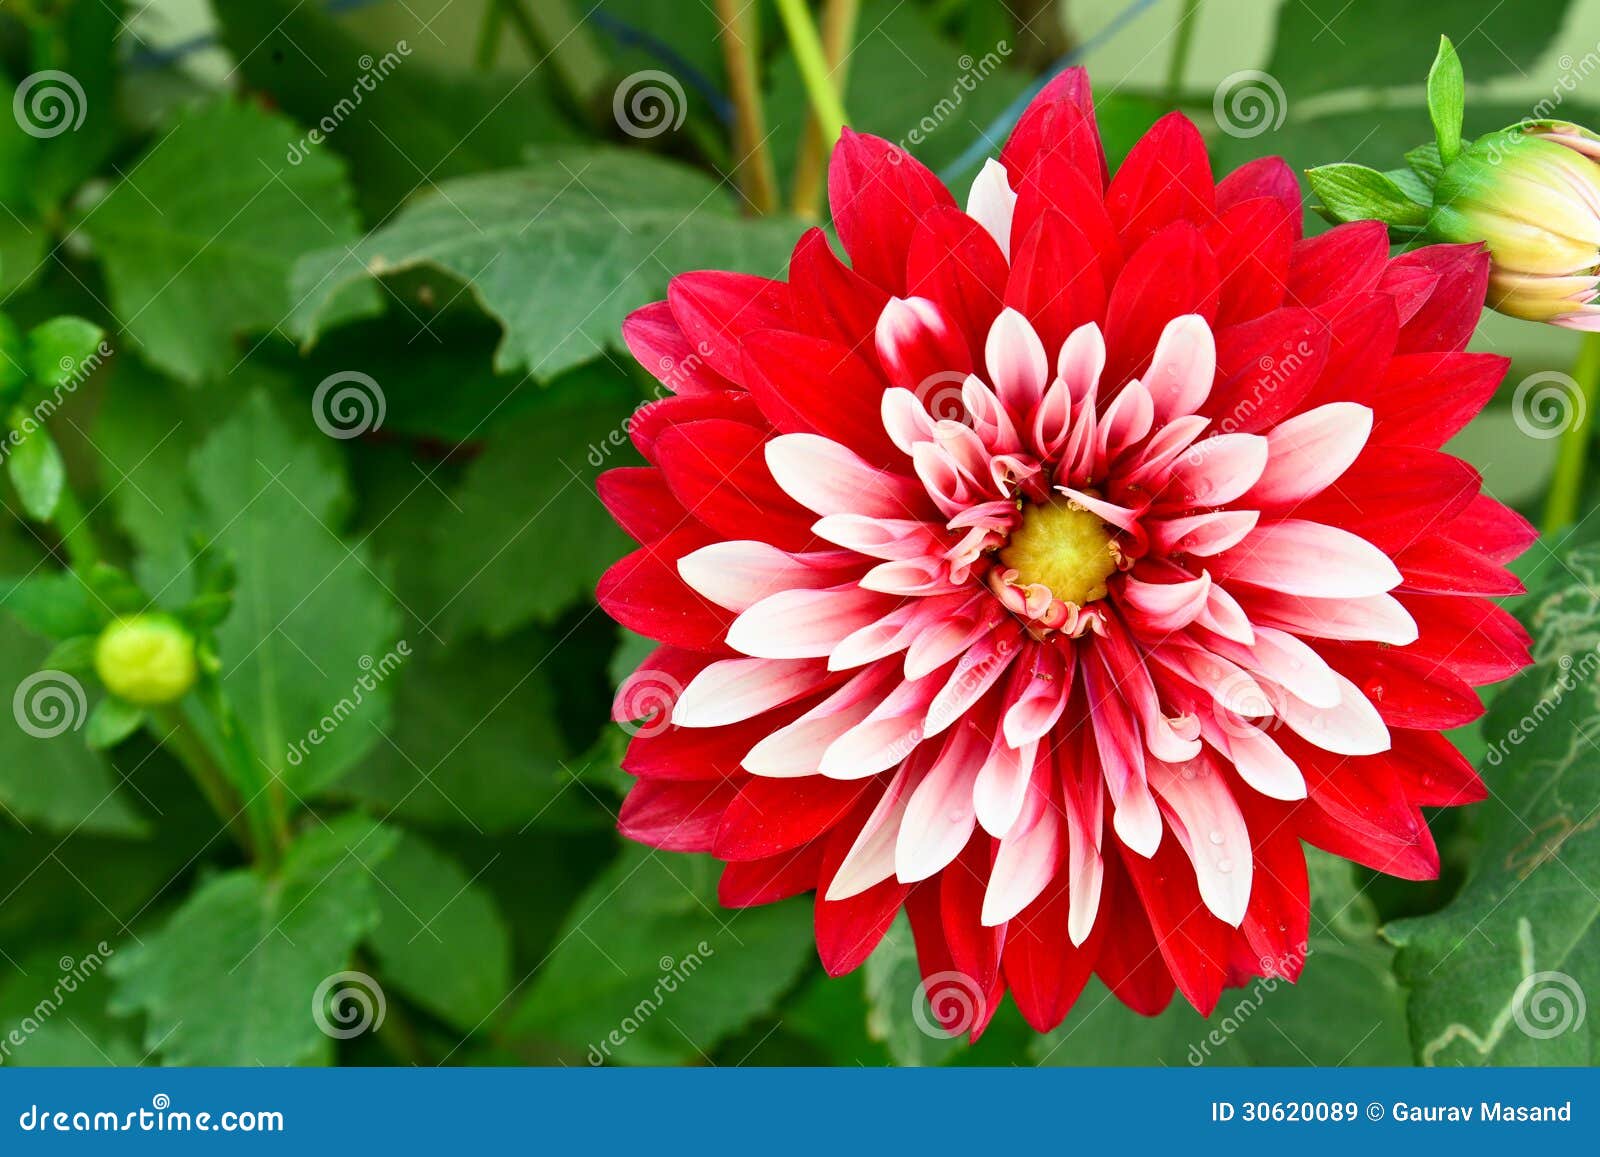 dalia flower